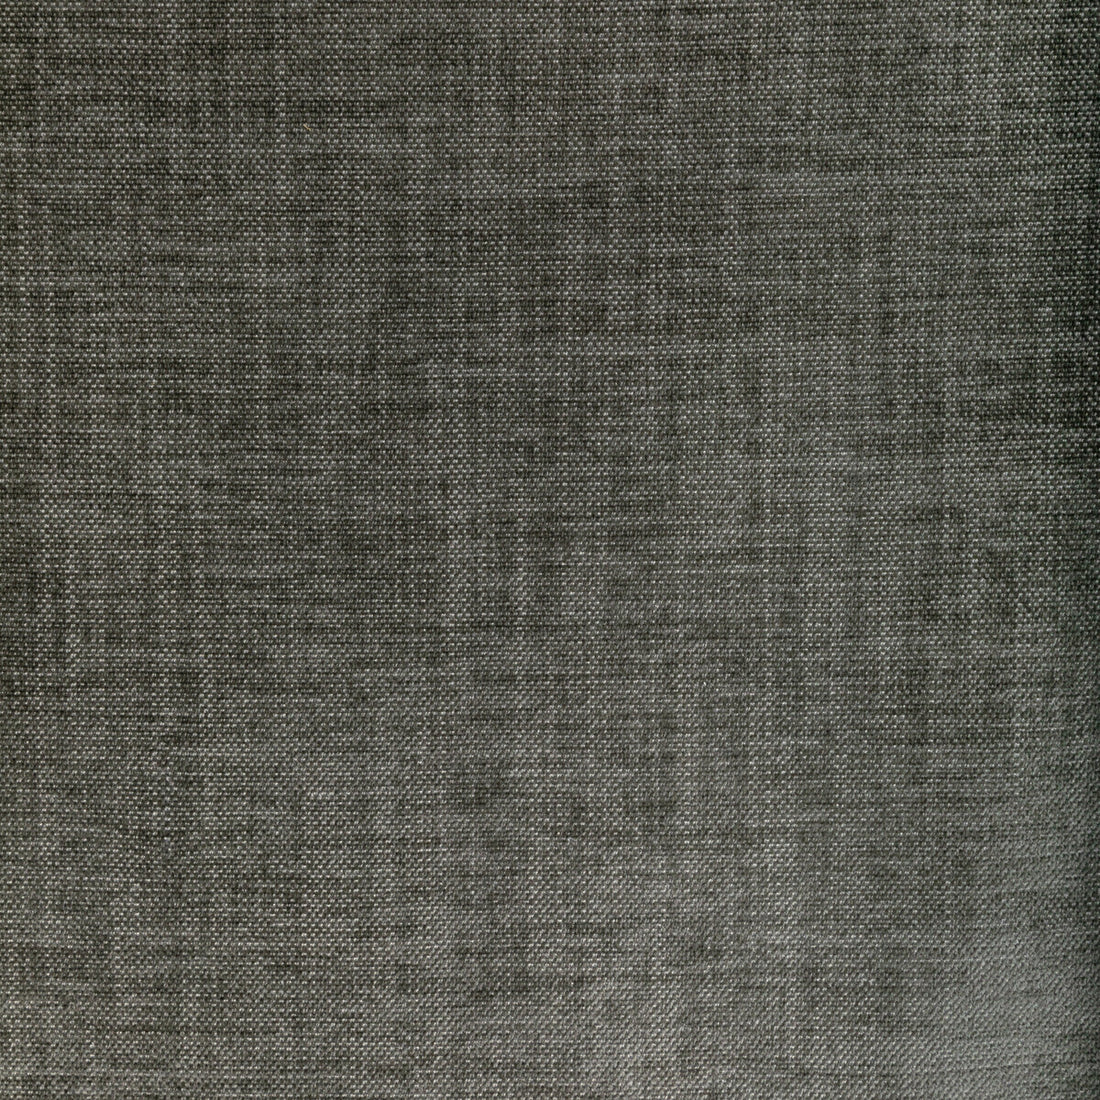 Kravet Smart fabric in 36650-21 color - pattern 36650.21.0 - by Kravet Smart in the Performance Kravetarmor collection